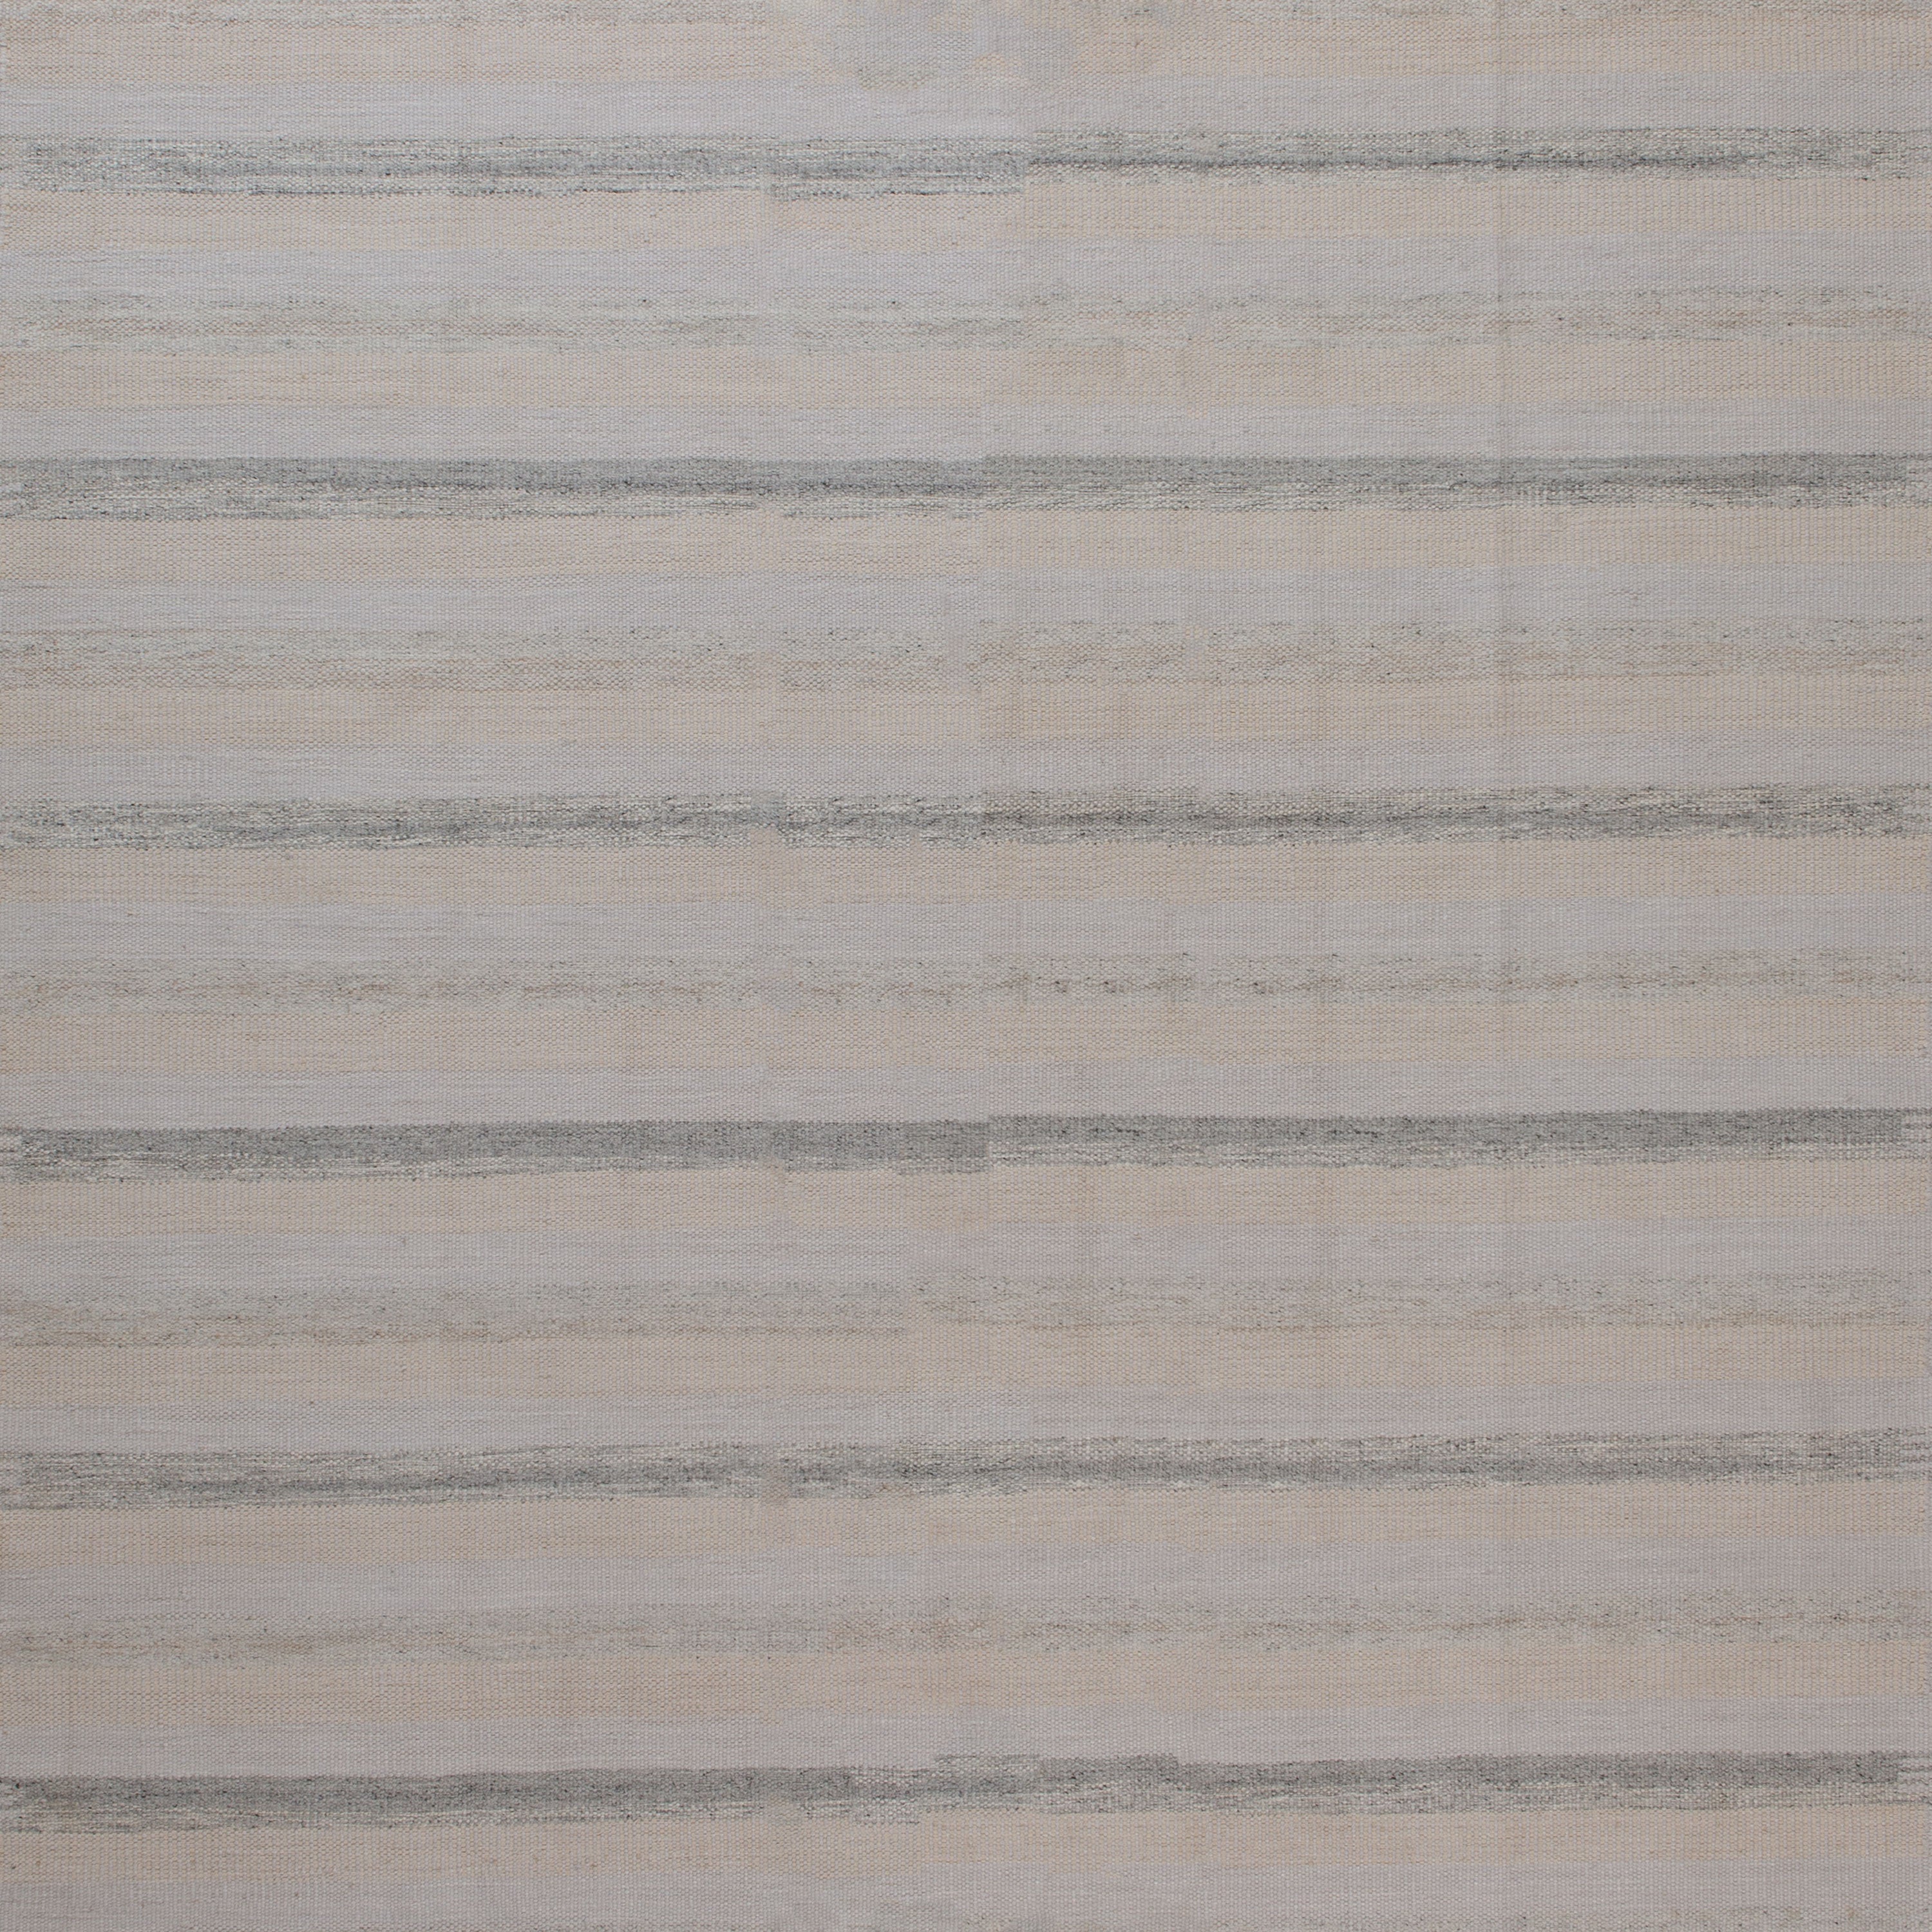 Grey Flatweave Wool Cotton Blend Rug - 9'1" x 12'